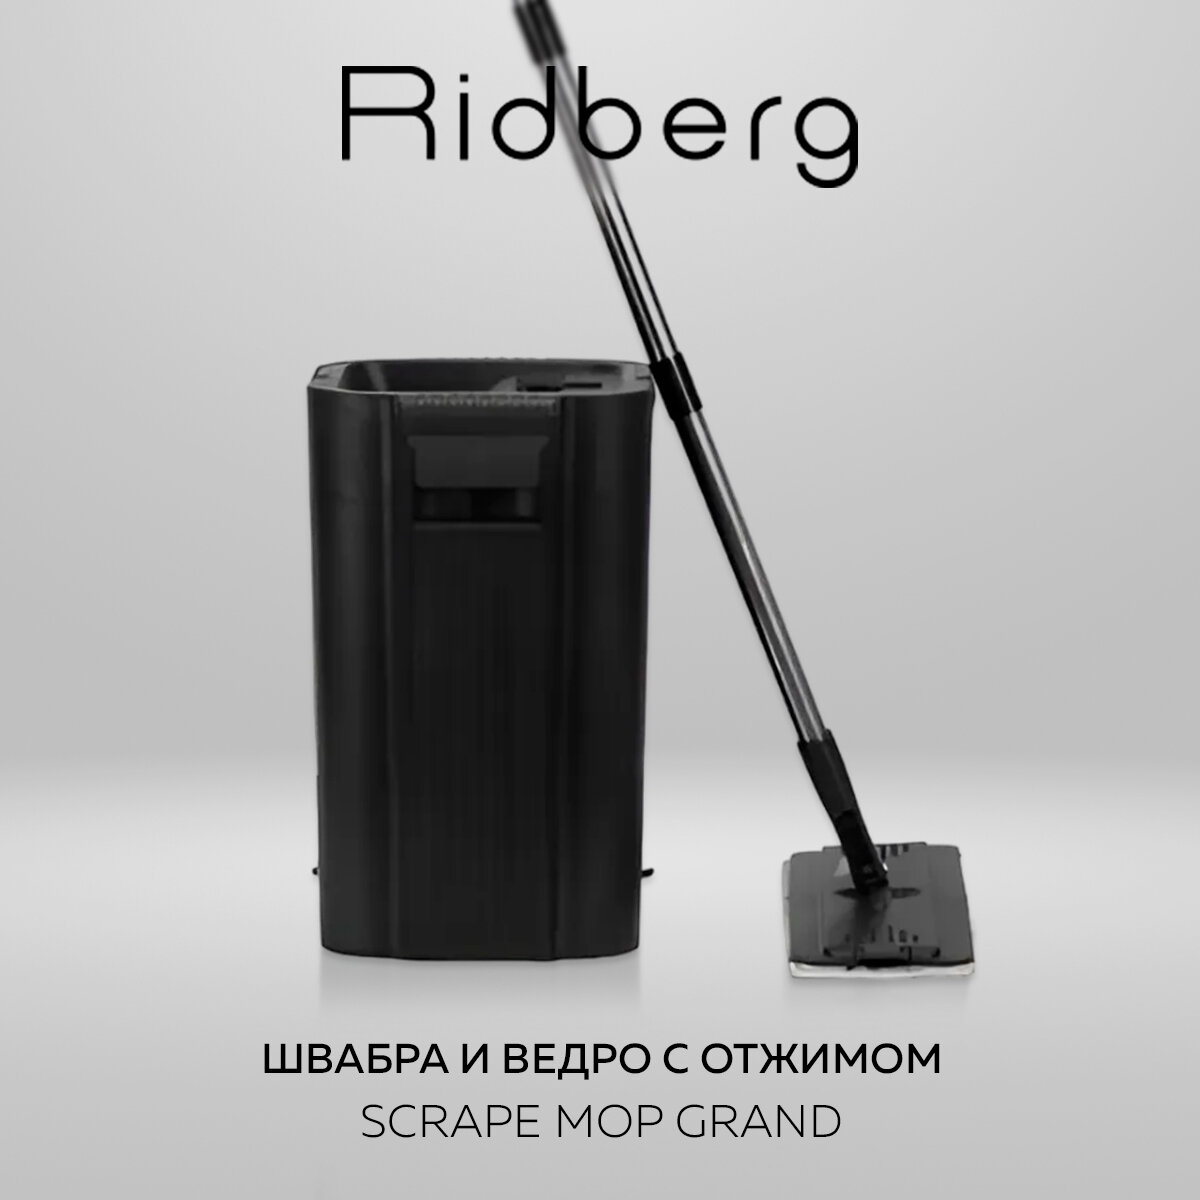 Швабра с отжимом и ведром Ridberg Scrape Mop Grand (Black) / 12 л. / 2 насадки в комплекте